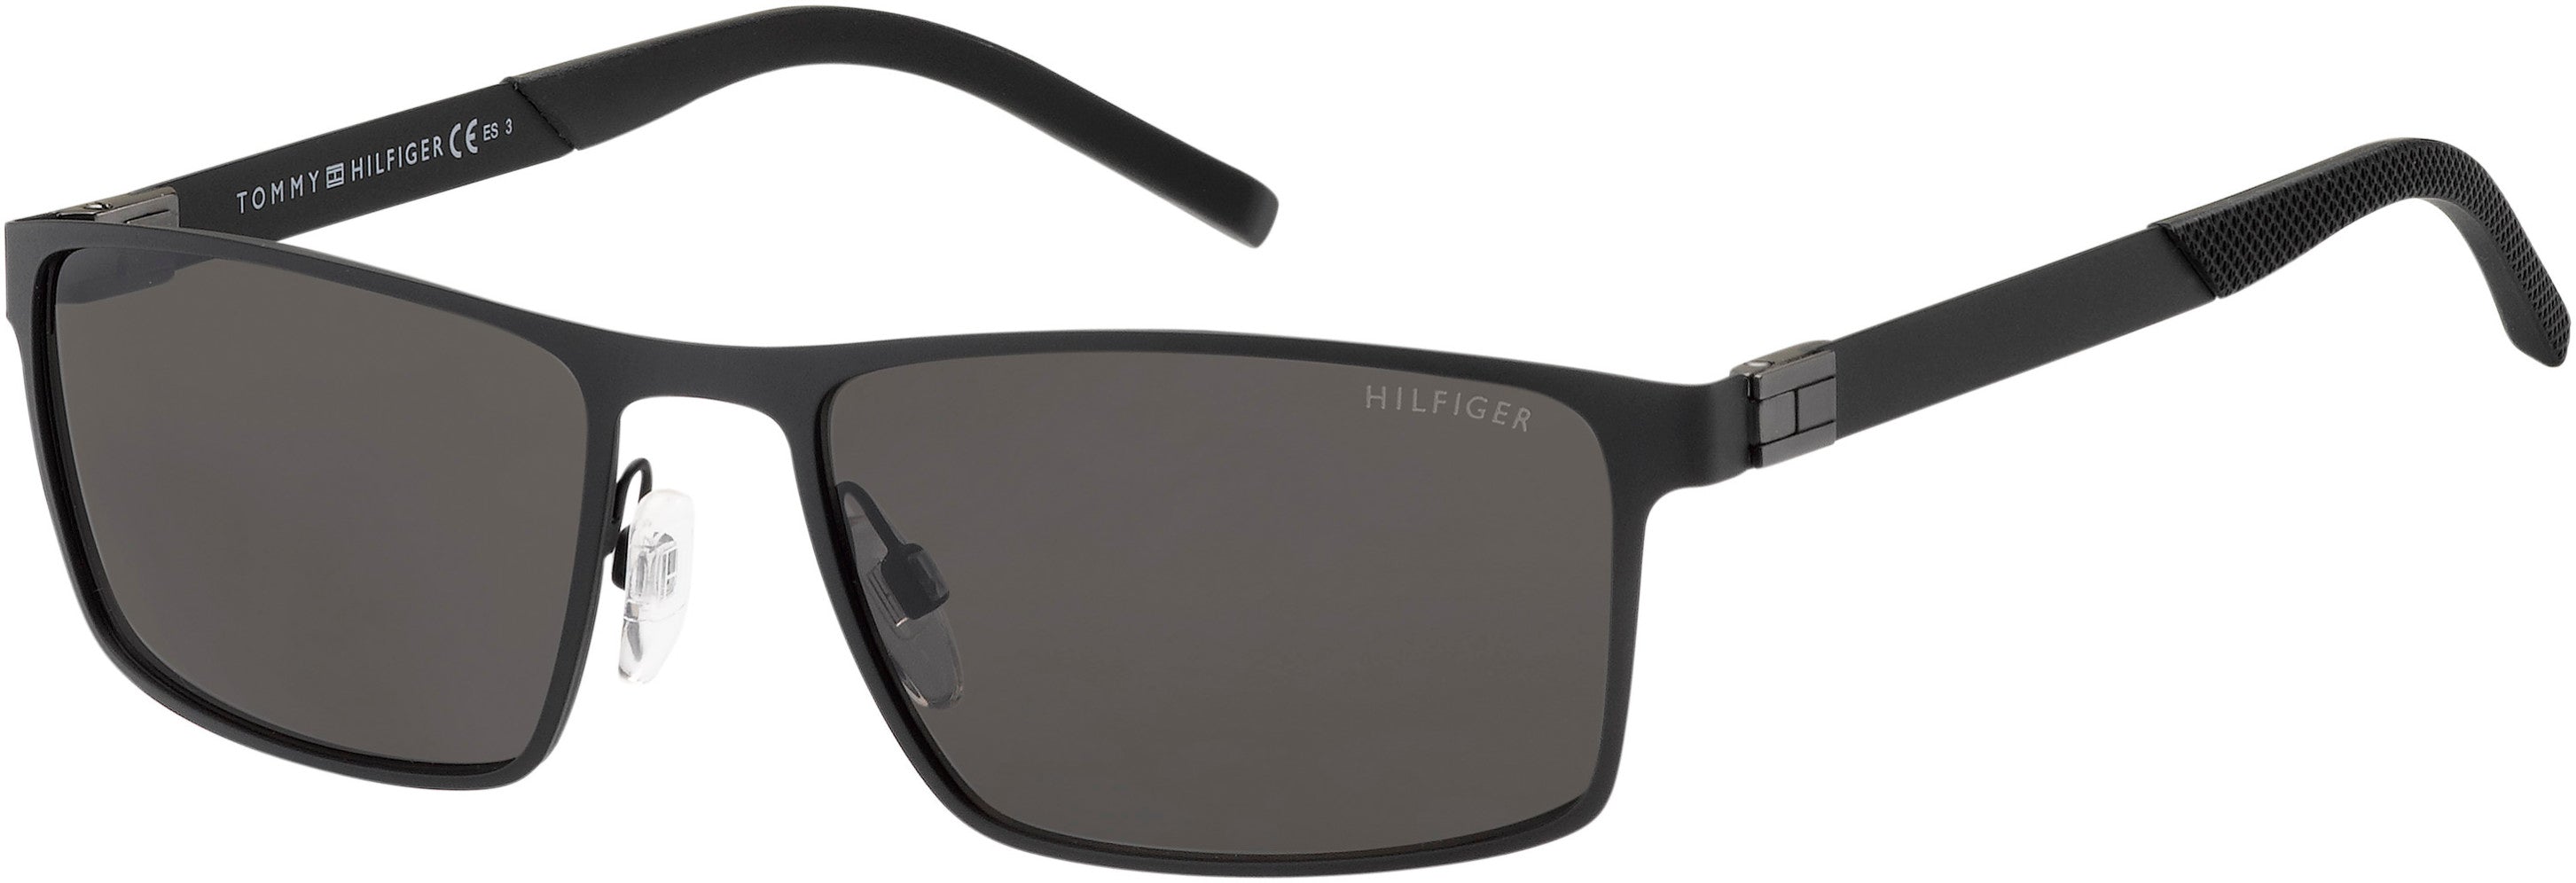 Tommy Hilfiger T. Hilfiger 1767/S Rectangular Sunglasses 0003-0003  Matte Black (IR Gray)